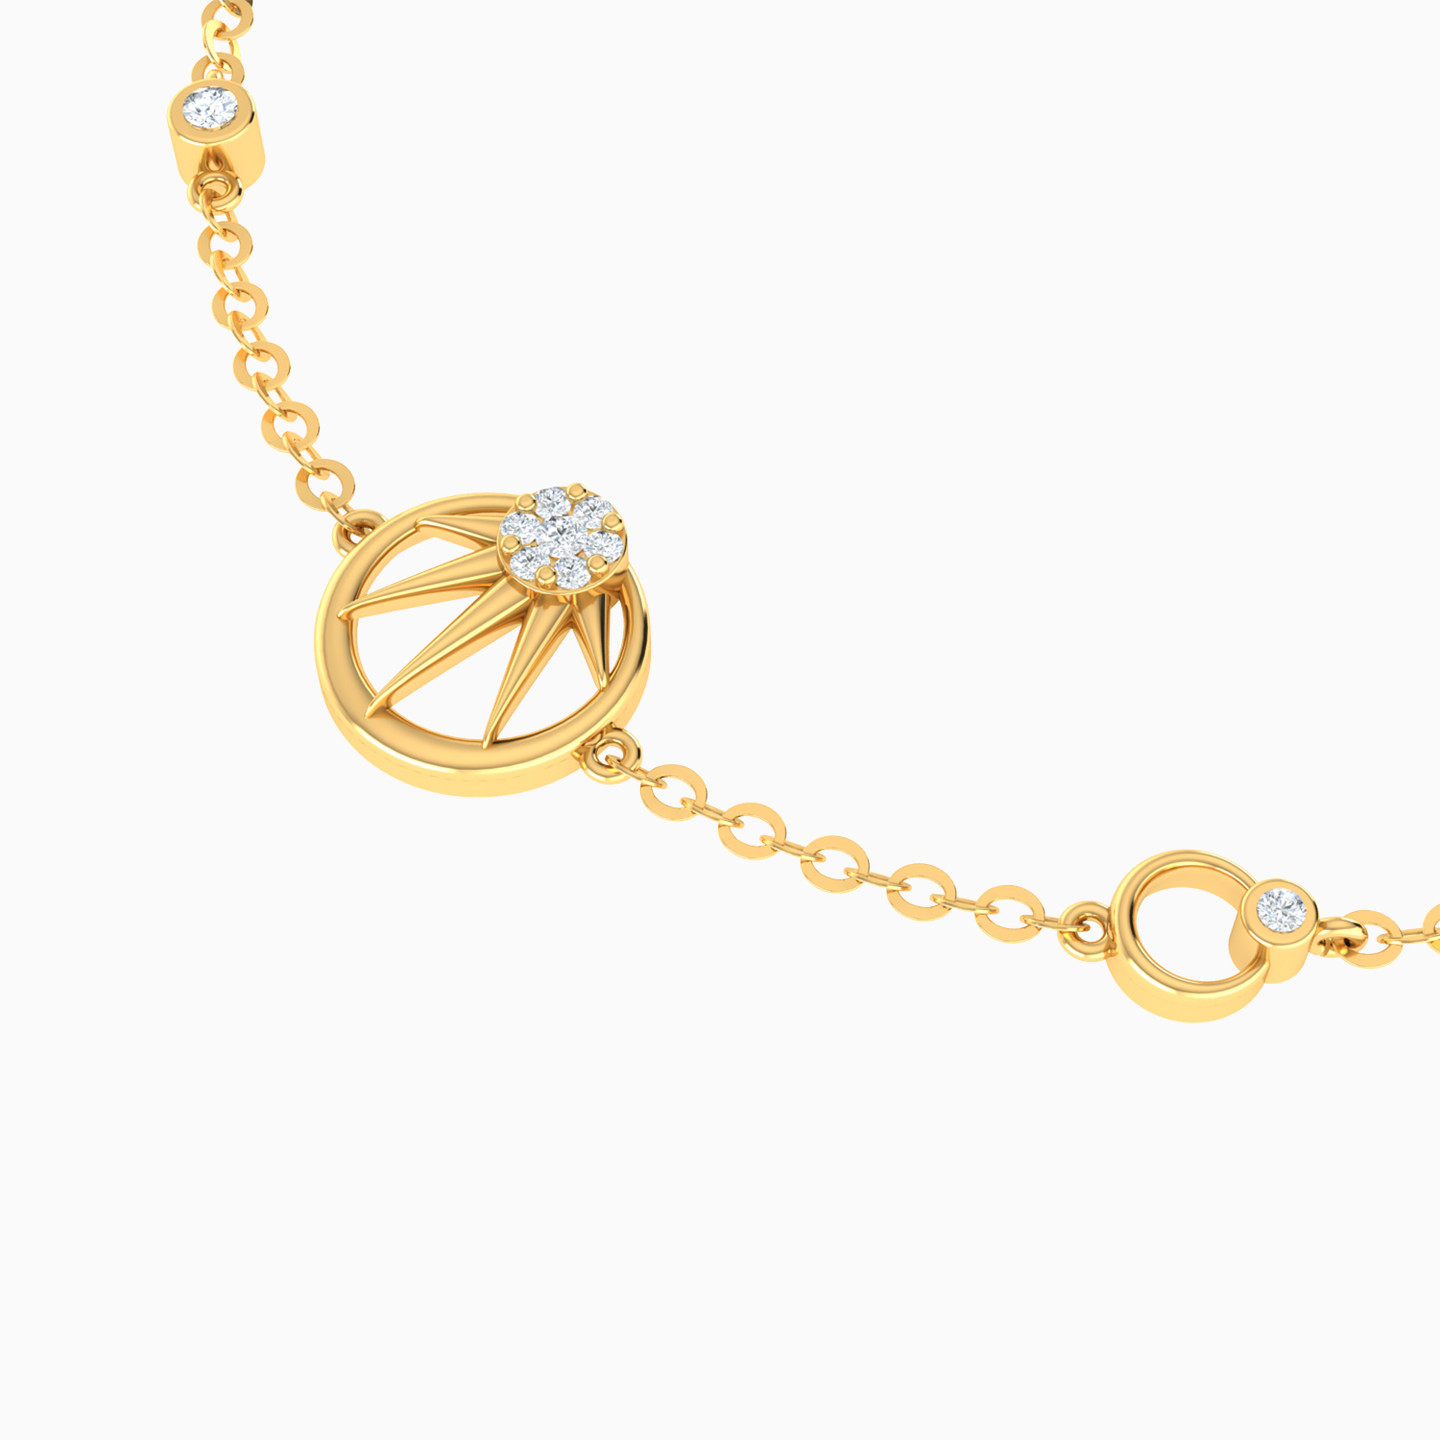 Round Shaped Diamond Chain Bracelet in 18K Gold  - 3